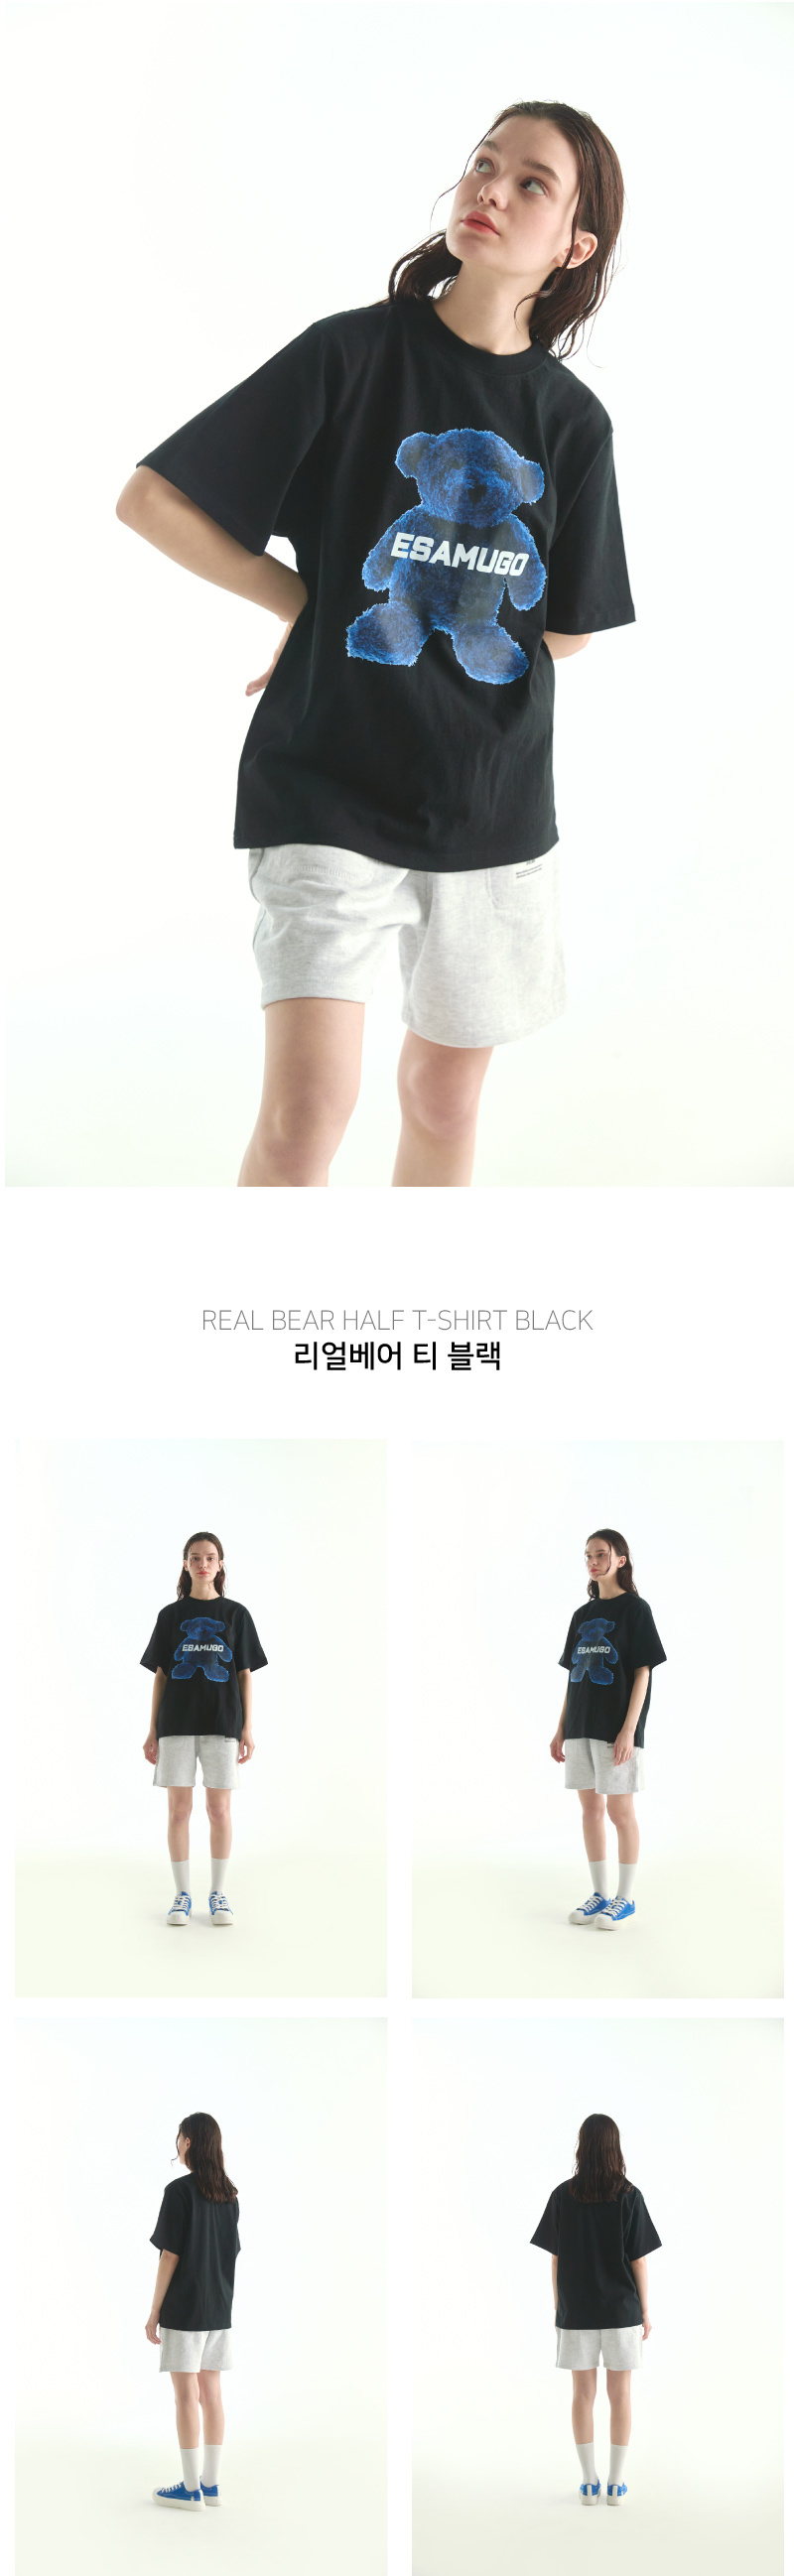 23.65(23.65) REAL BEAR HALF T-SHIRT BLACK